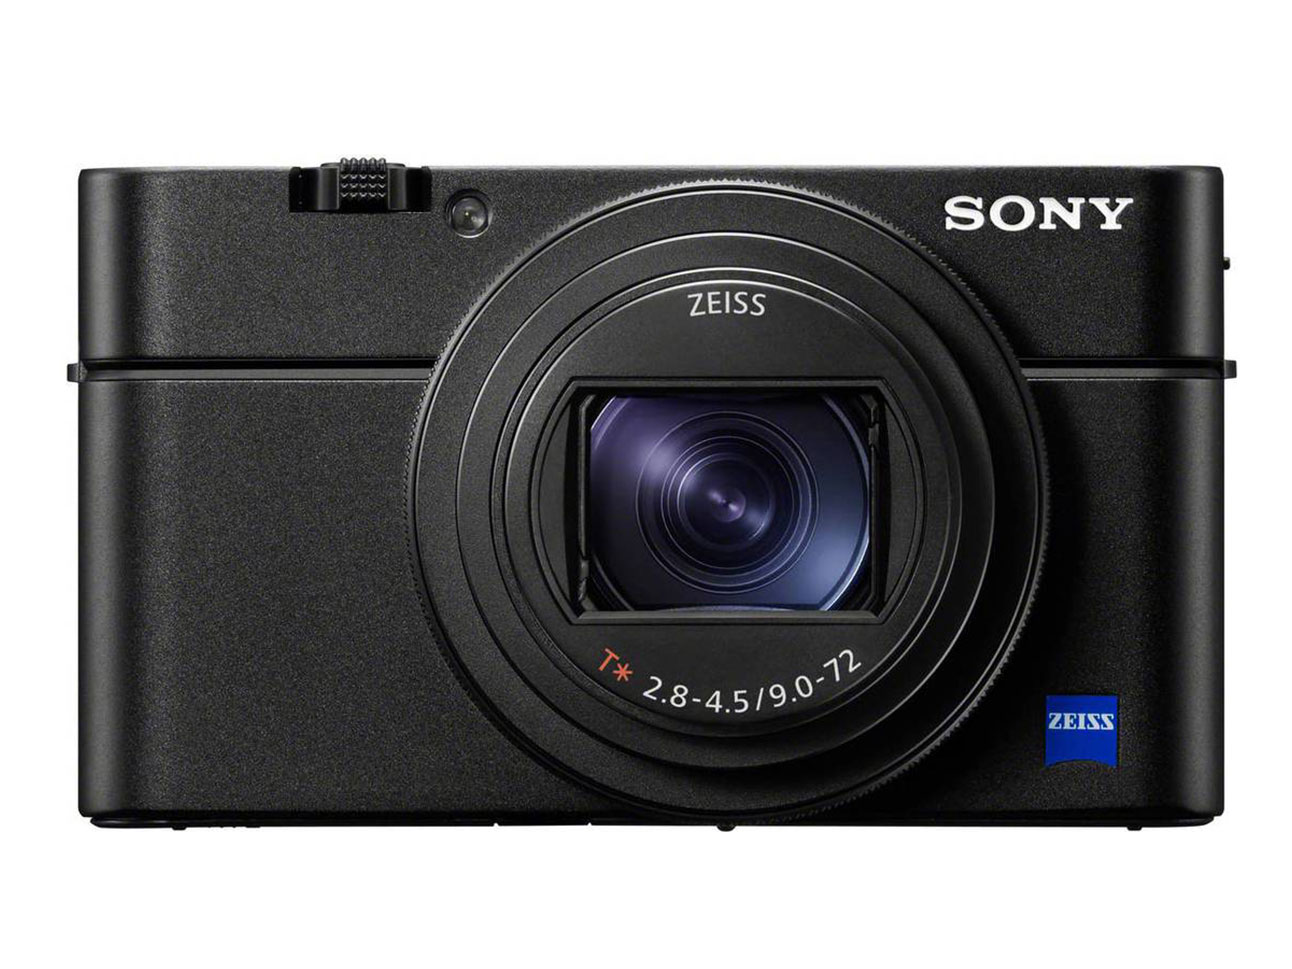 Sony Cyber-shot DSC-RX100 VII sensor review